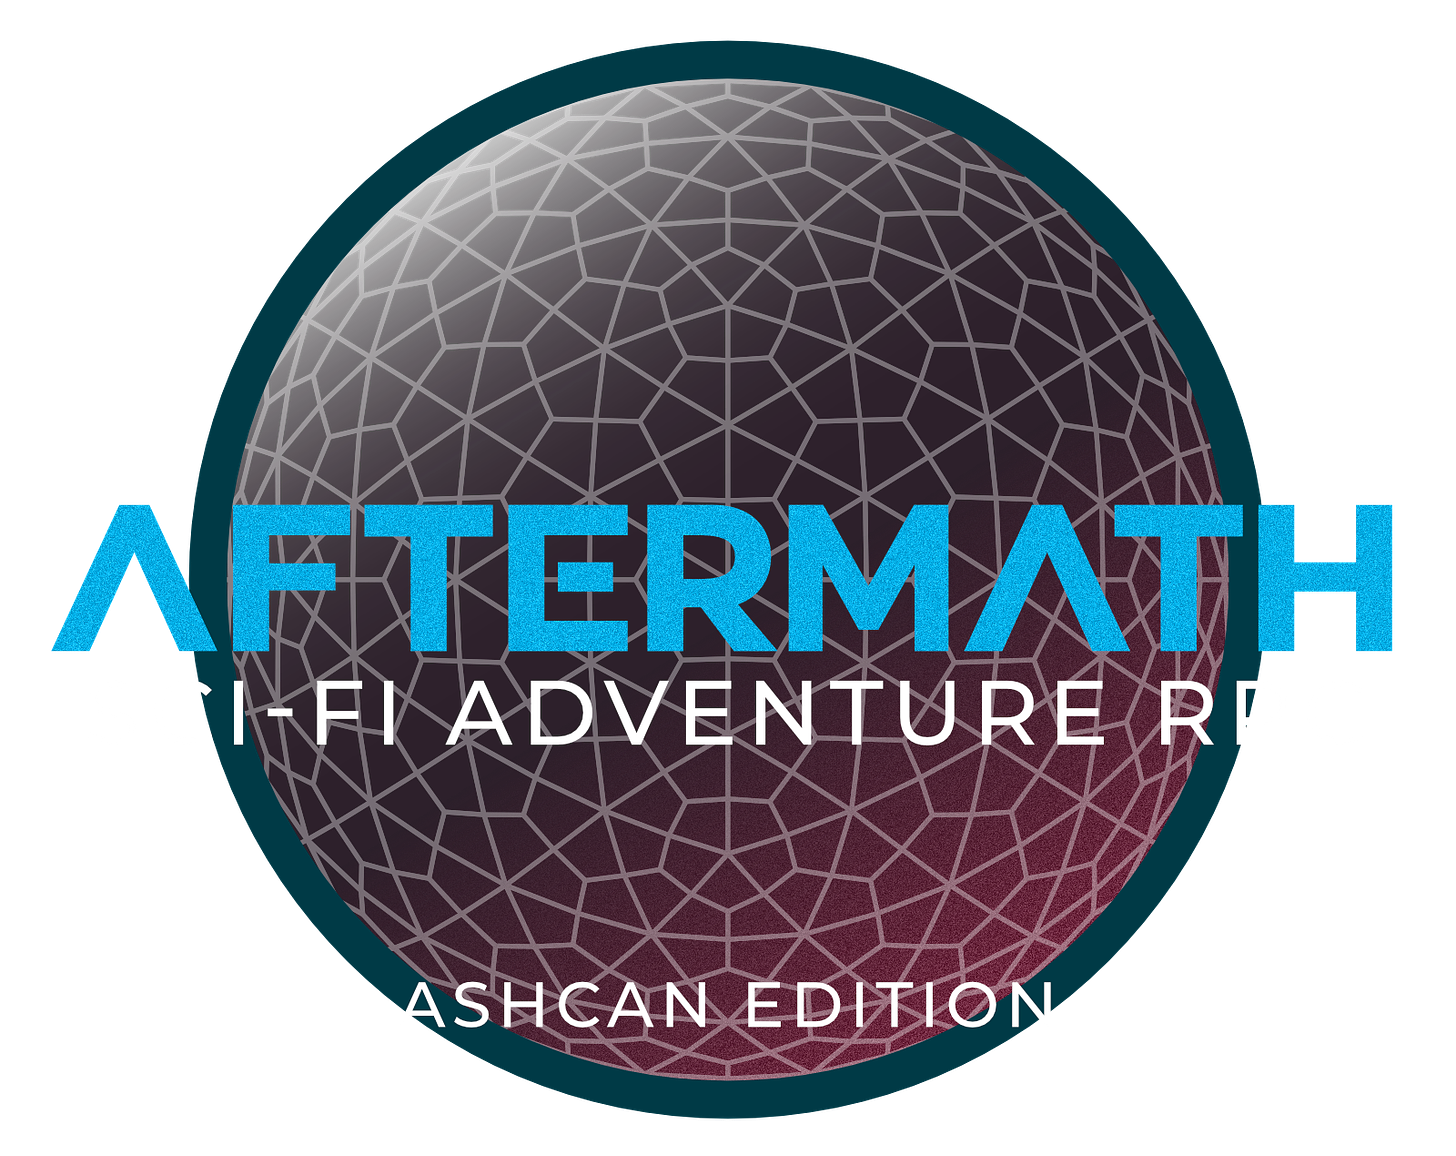 Aftermath — A Sci-Fi Adventure RPG Ashcan